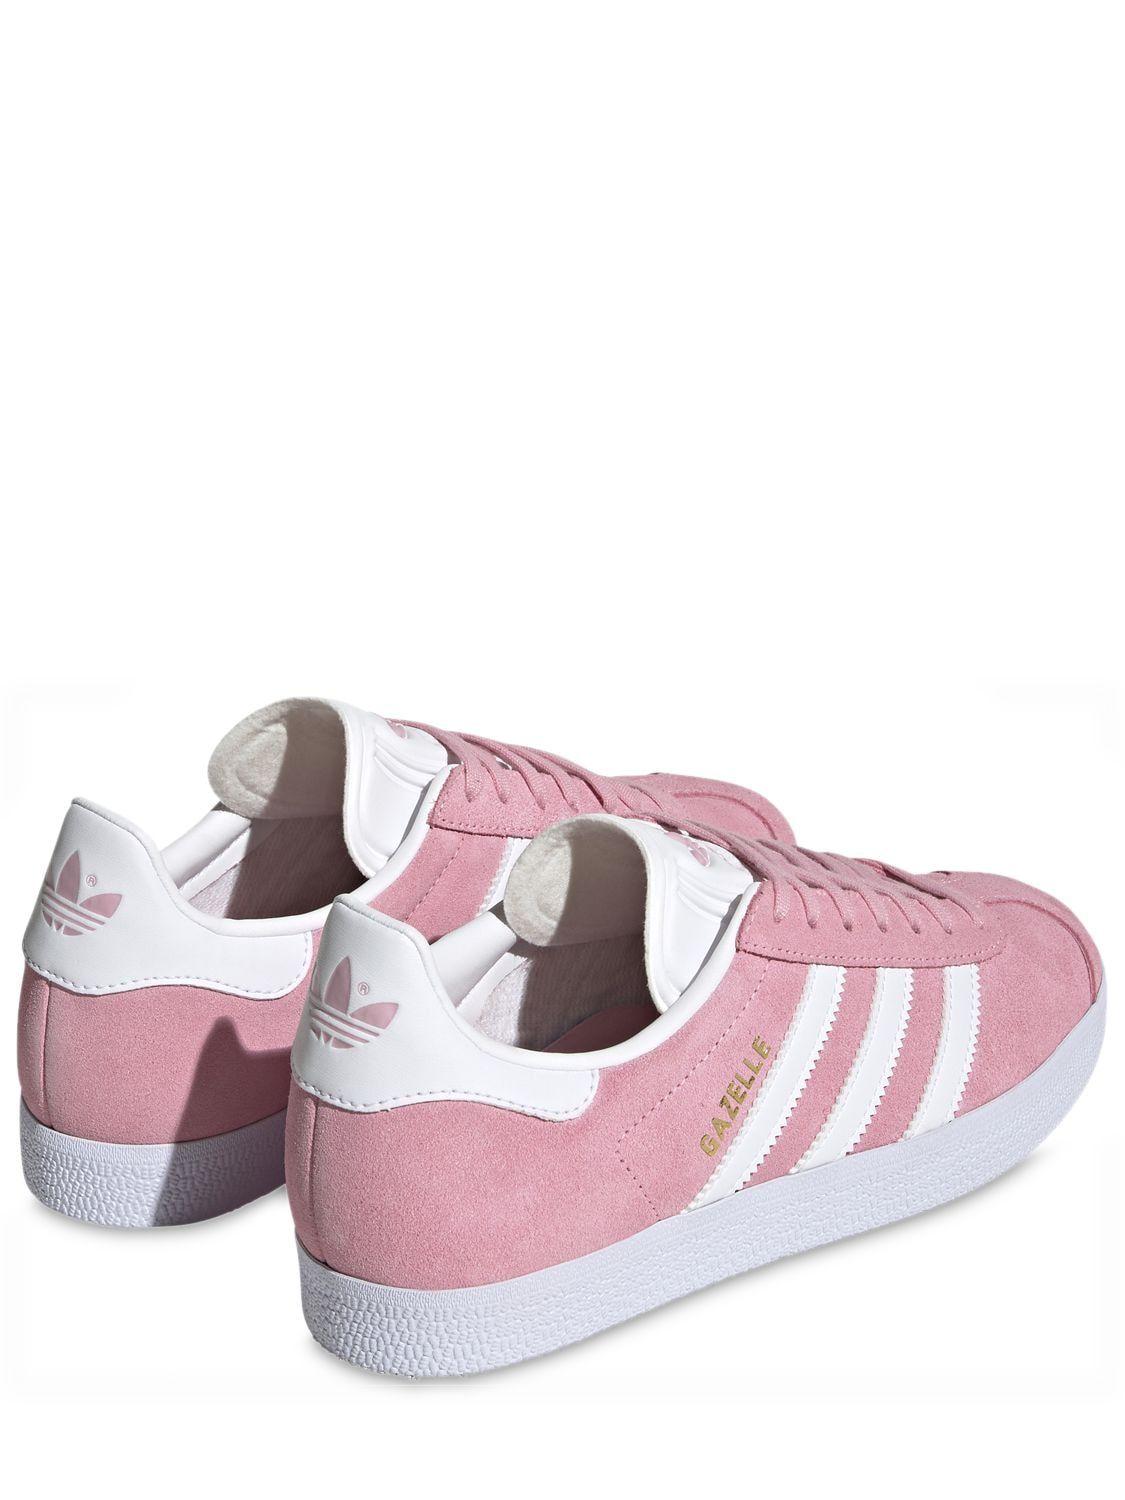 adidas Originals Gazelle Shoes in Pink | Lyst